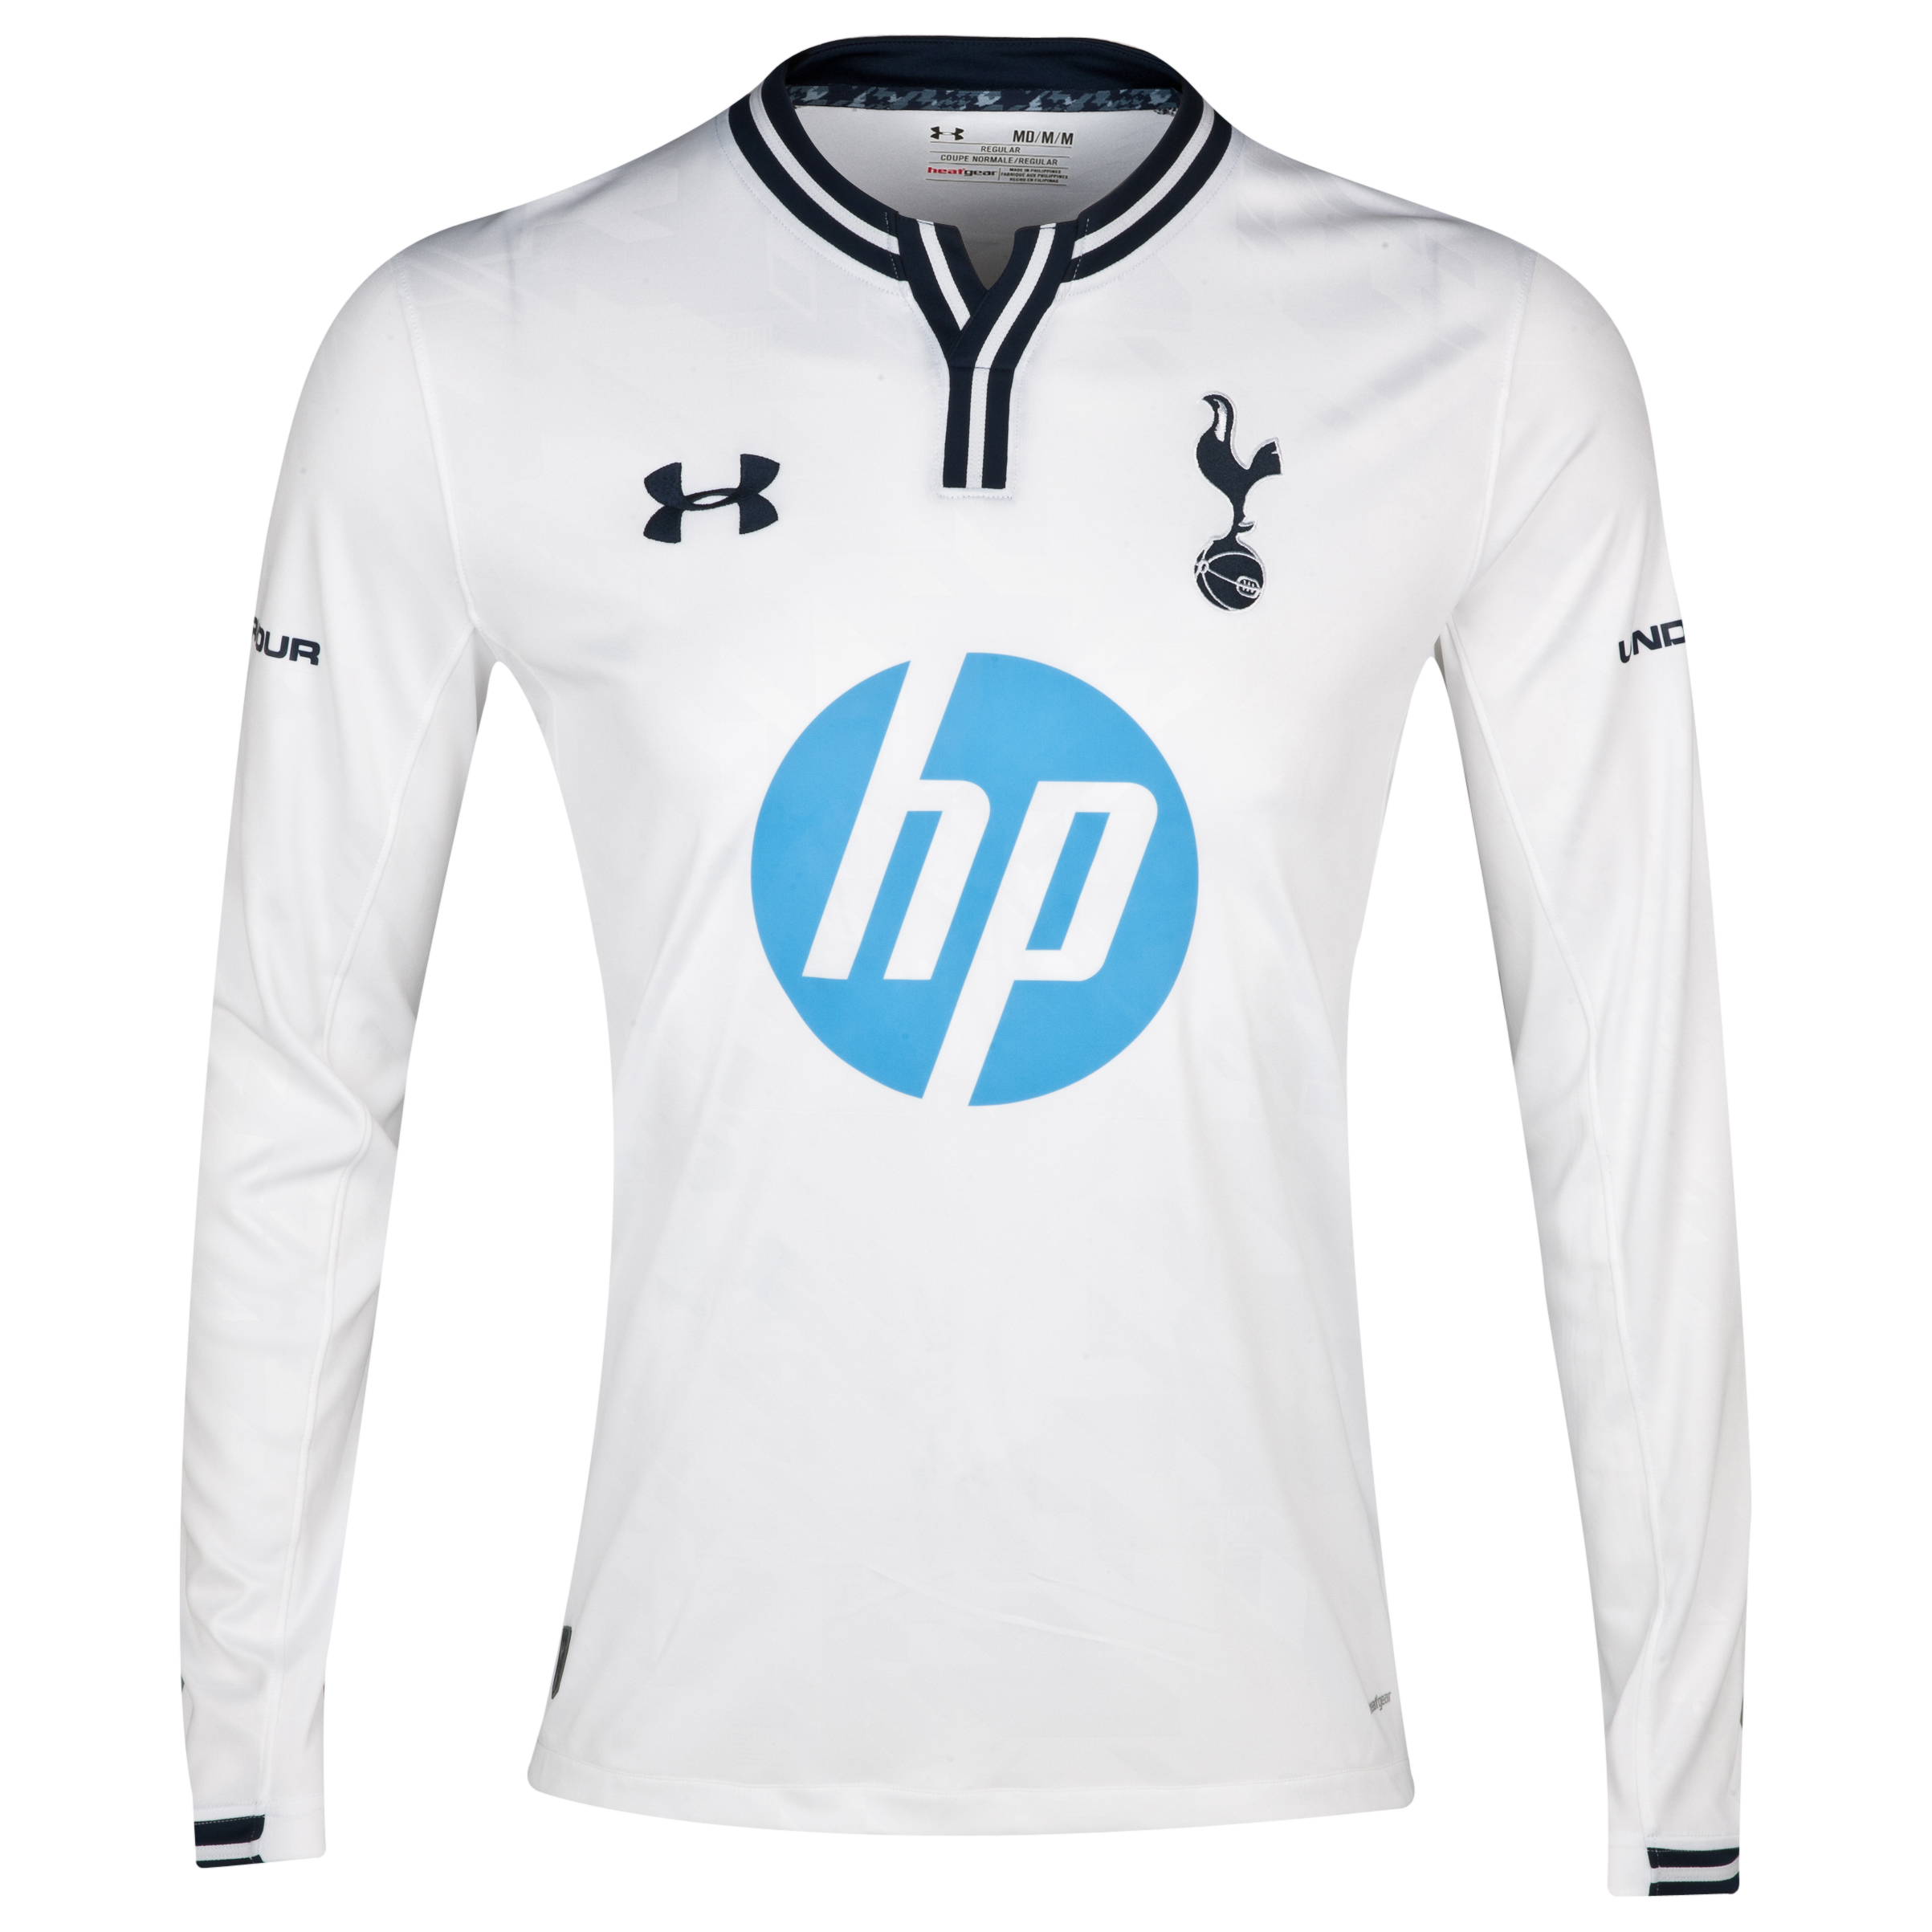 Tottenham Hotspur Home Shirt 2013/14 - Long Sleeve